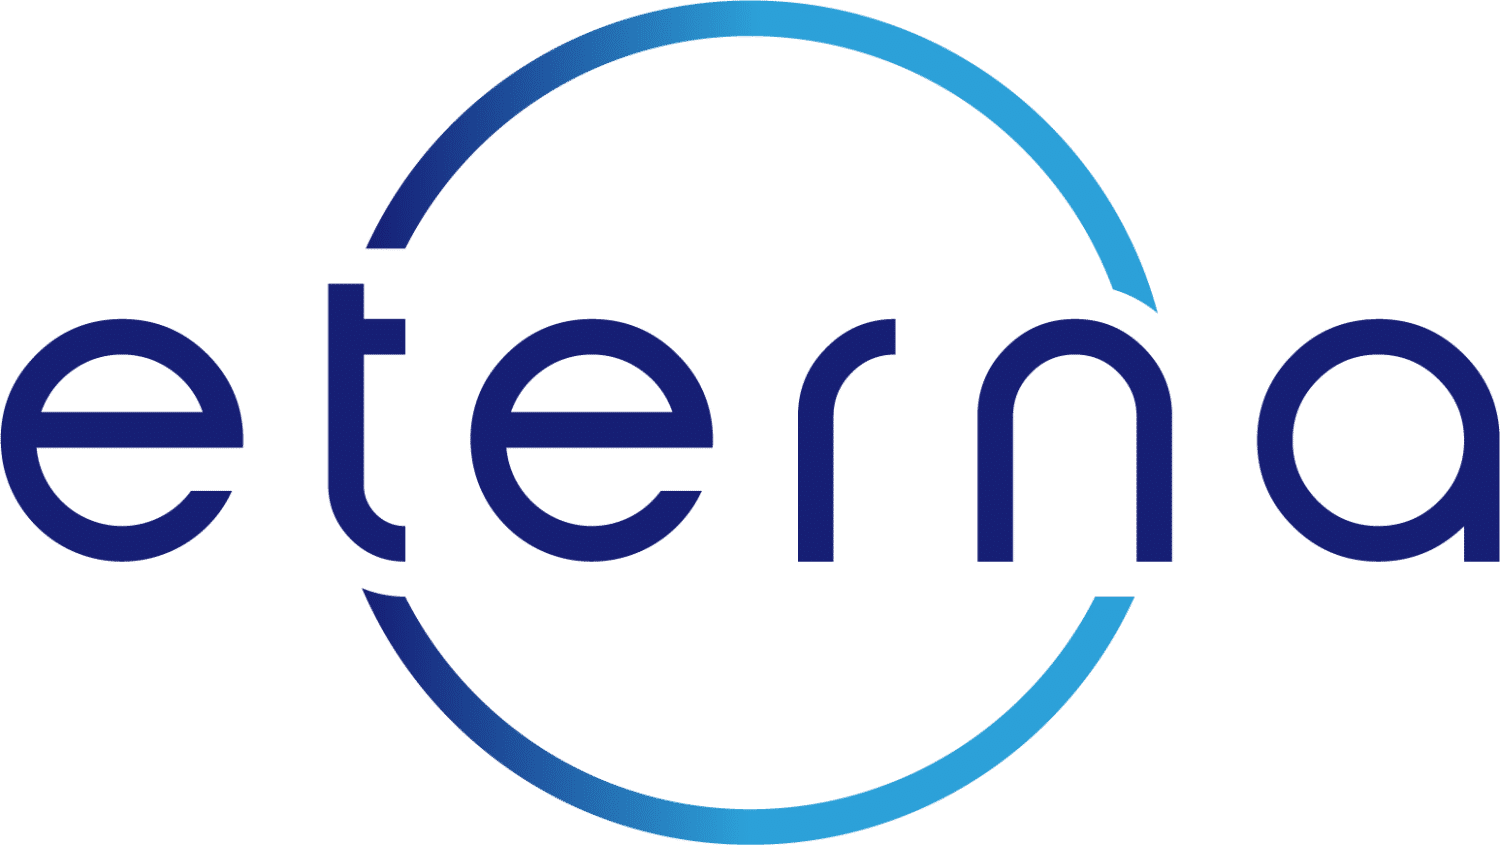 Eterna Therapeutics LLC